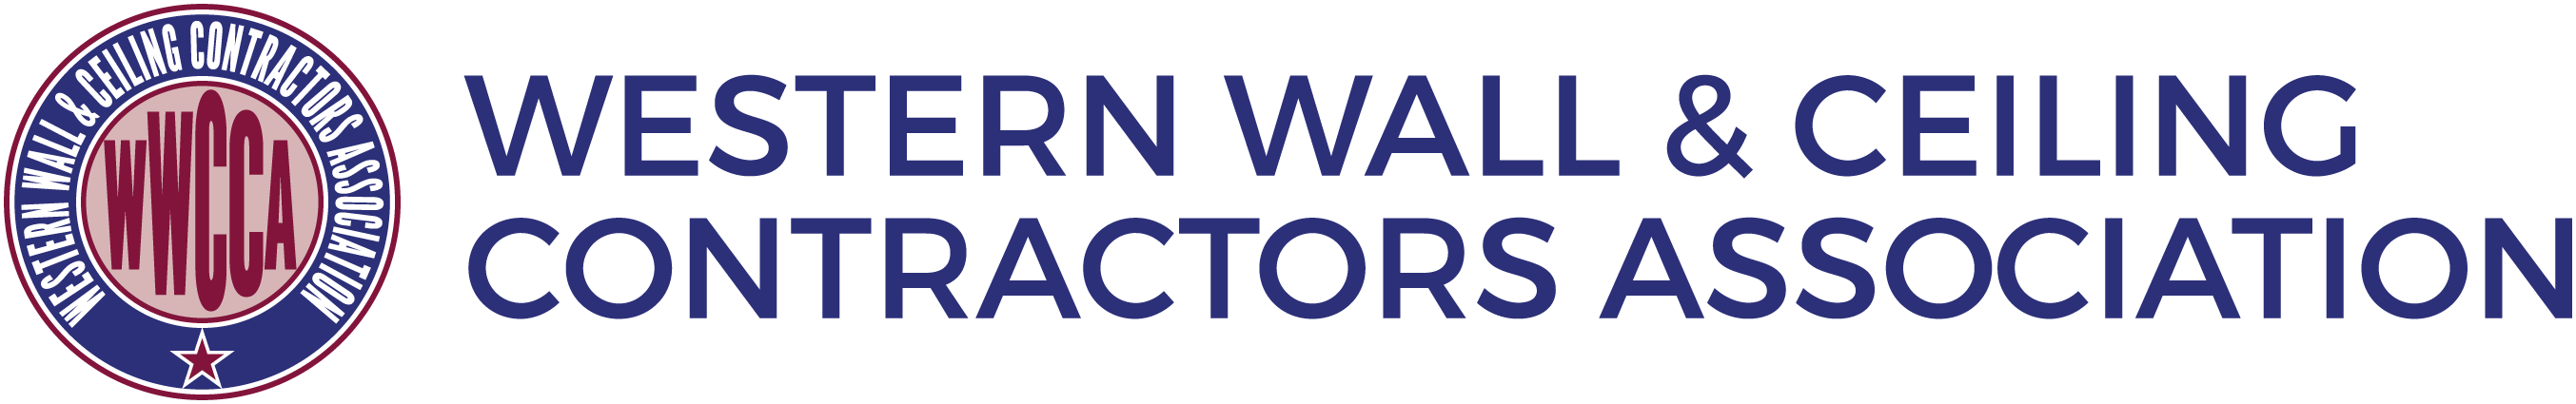 Western Wall & Ceiling Contractors Association, Inc. Logo